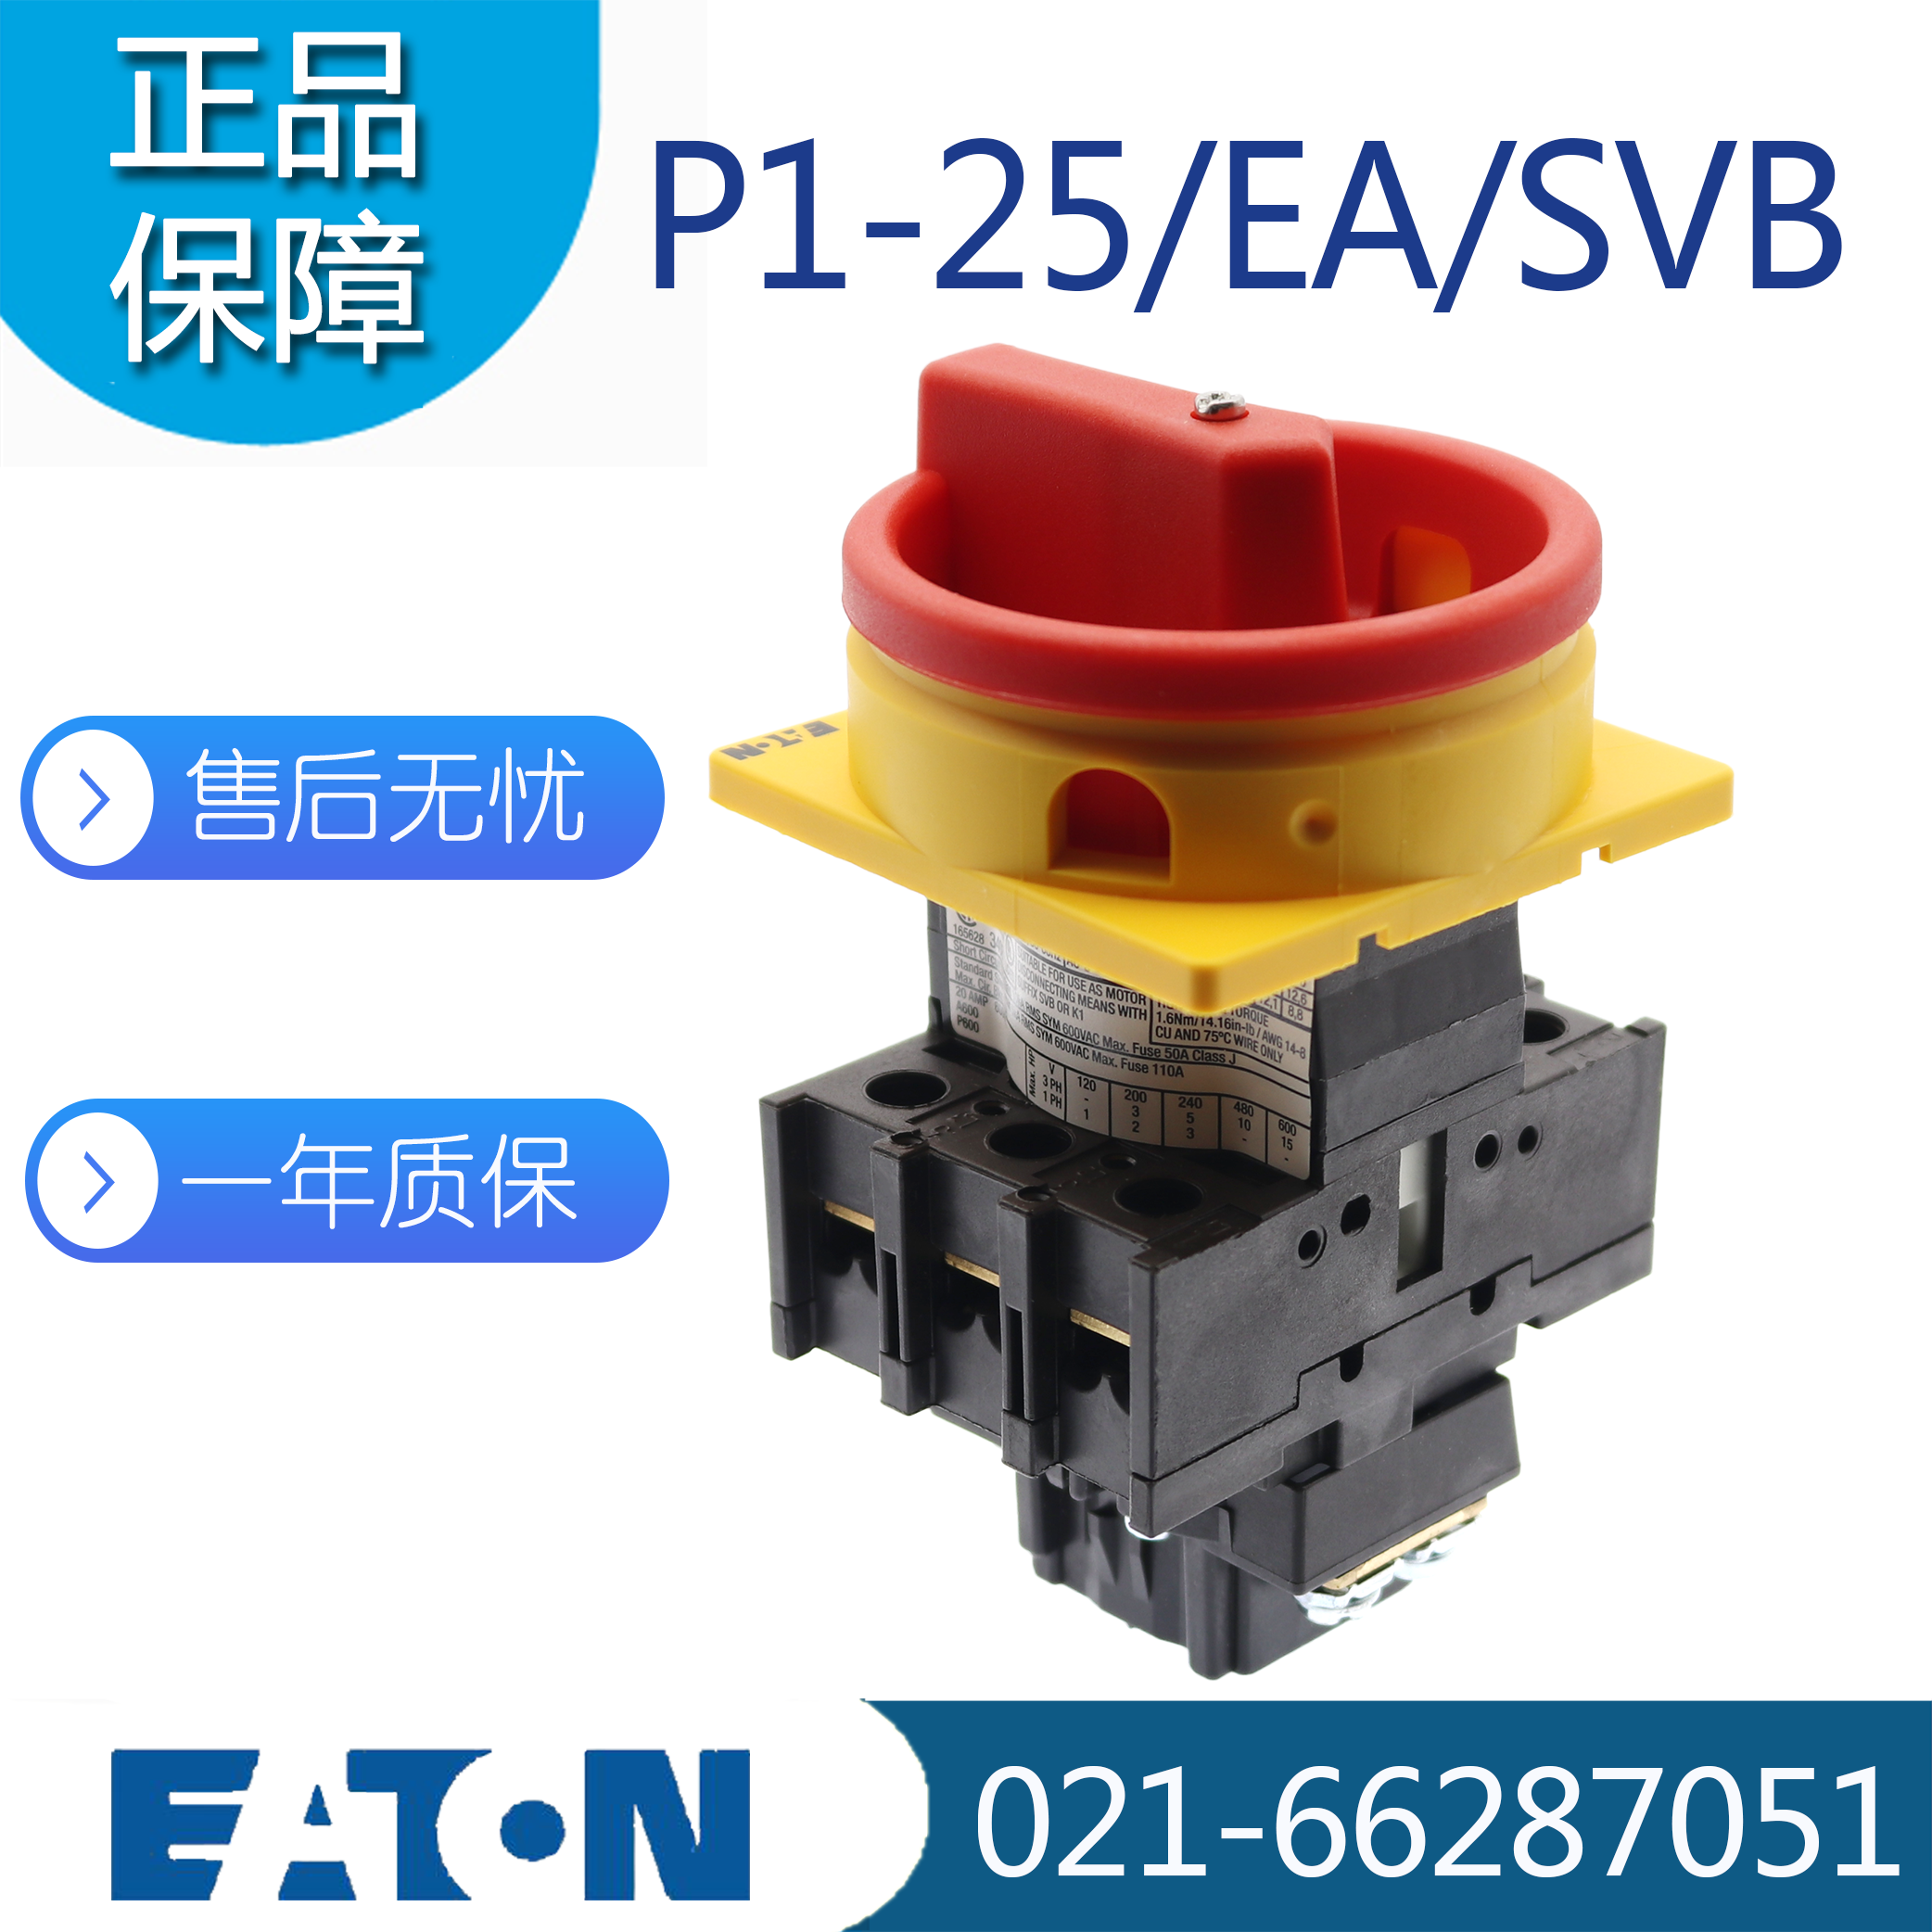 Eaton mill load disconnector p1-25 / EA / SVB p1-32 t0-2-1 p3-63 p3-100